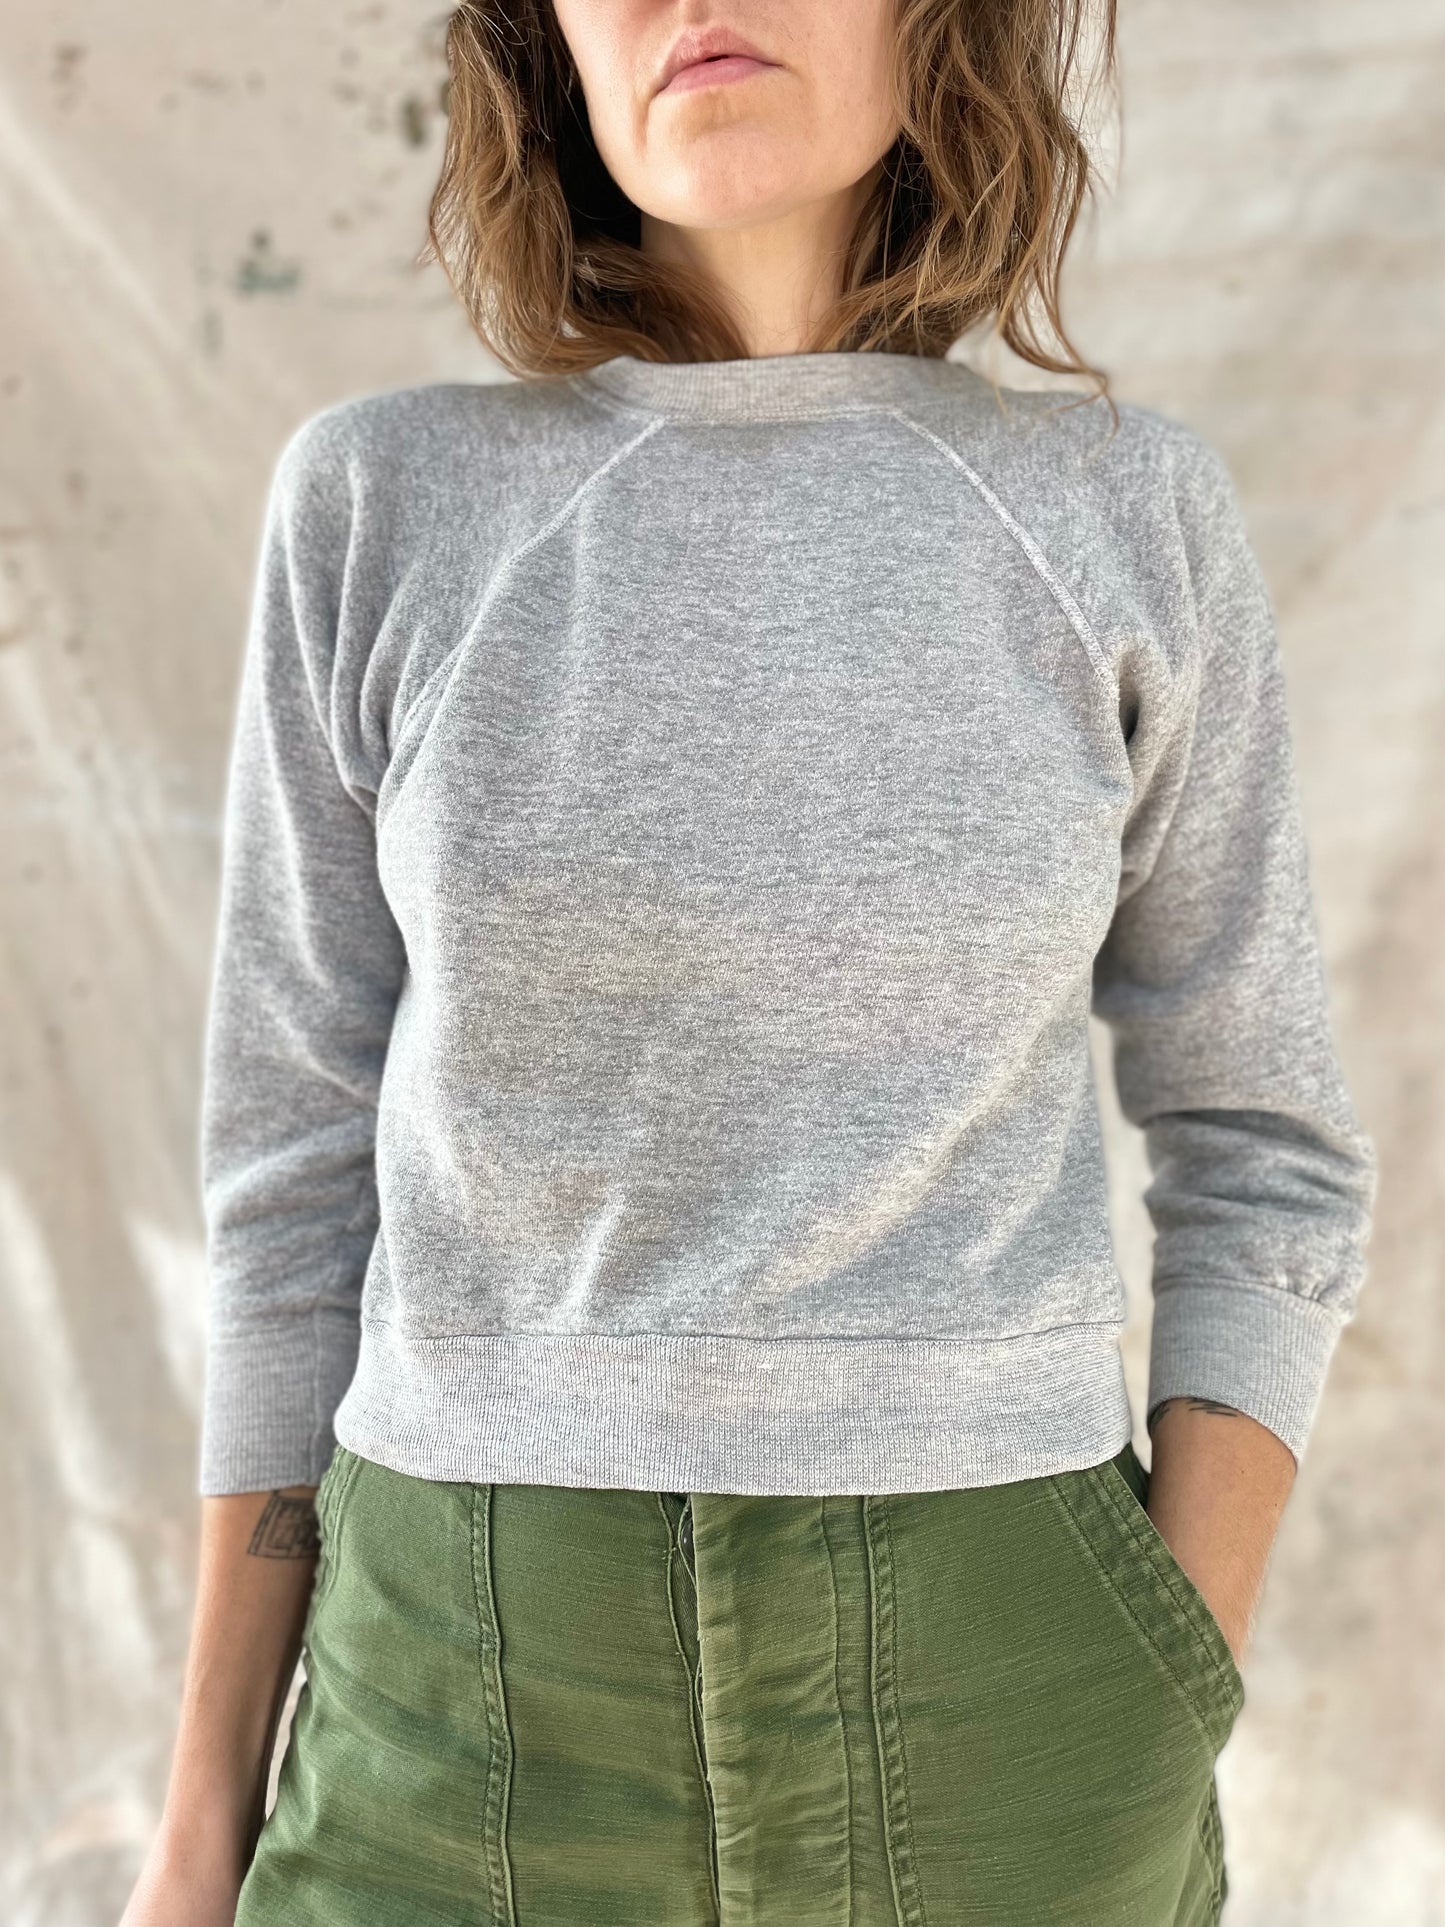 70s Blank Grey Sweatshirt